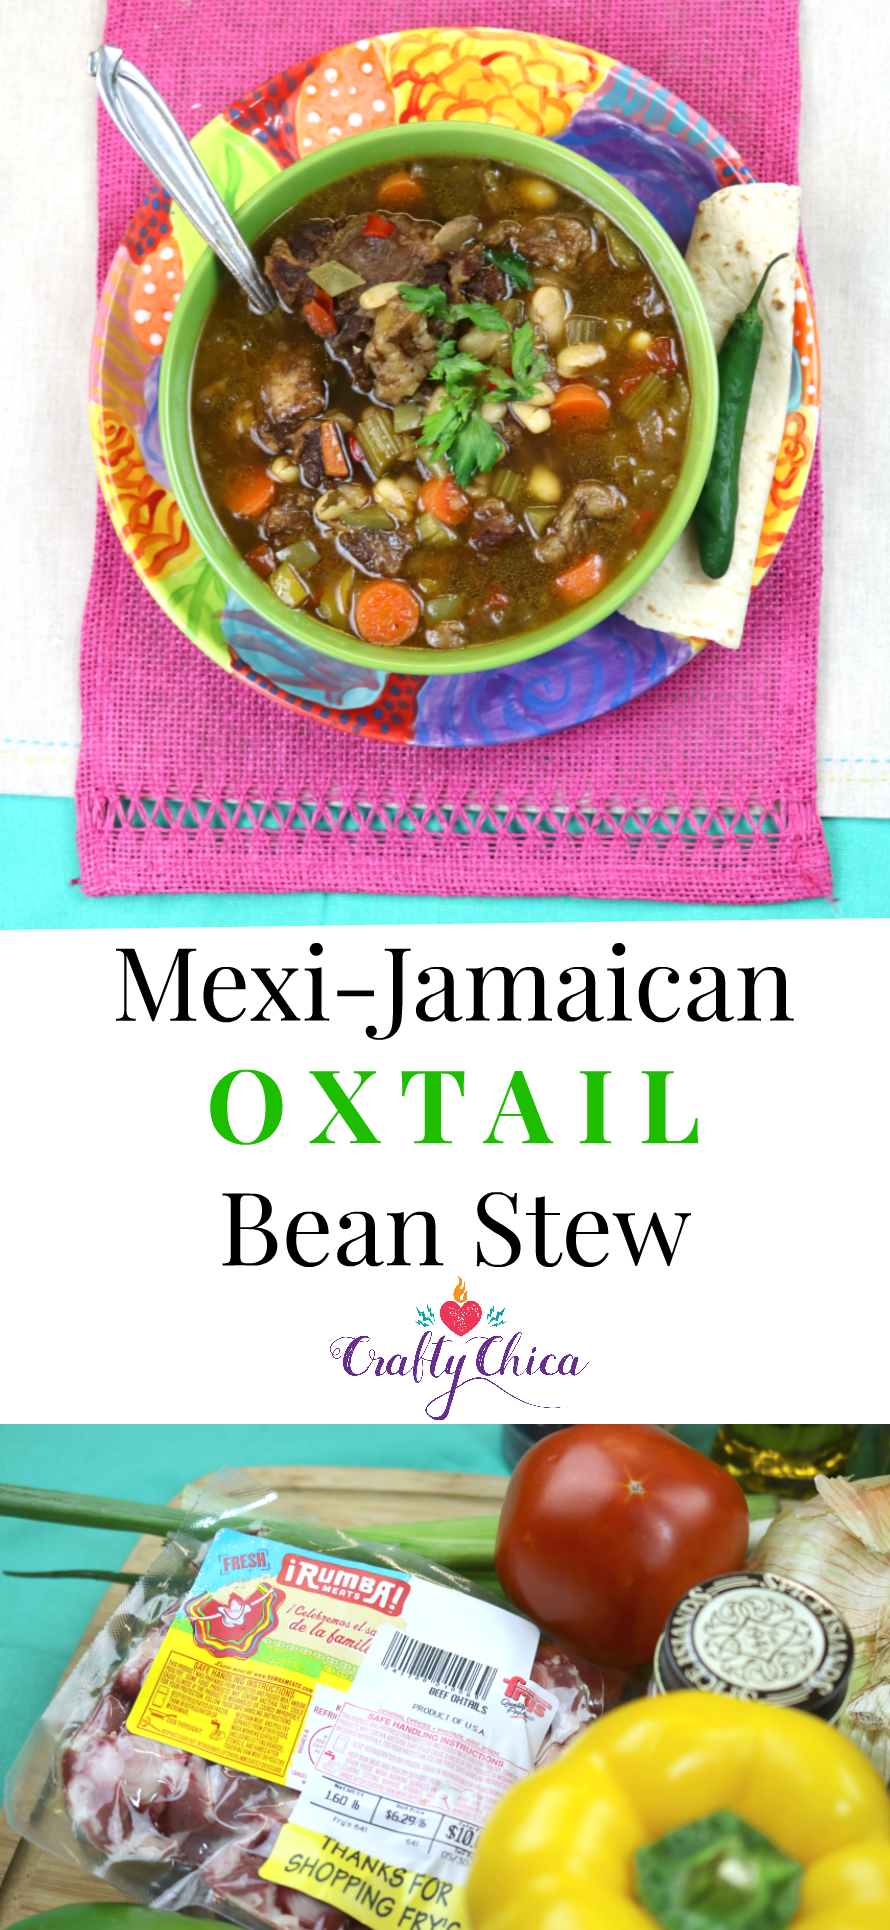 Oxtail Bean Stew